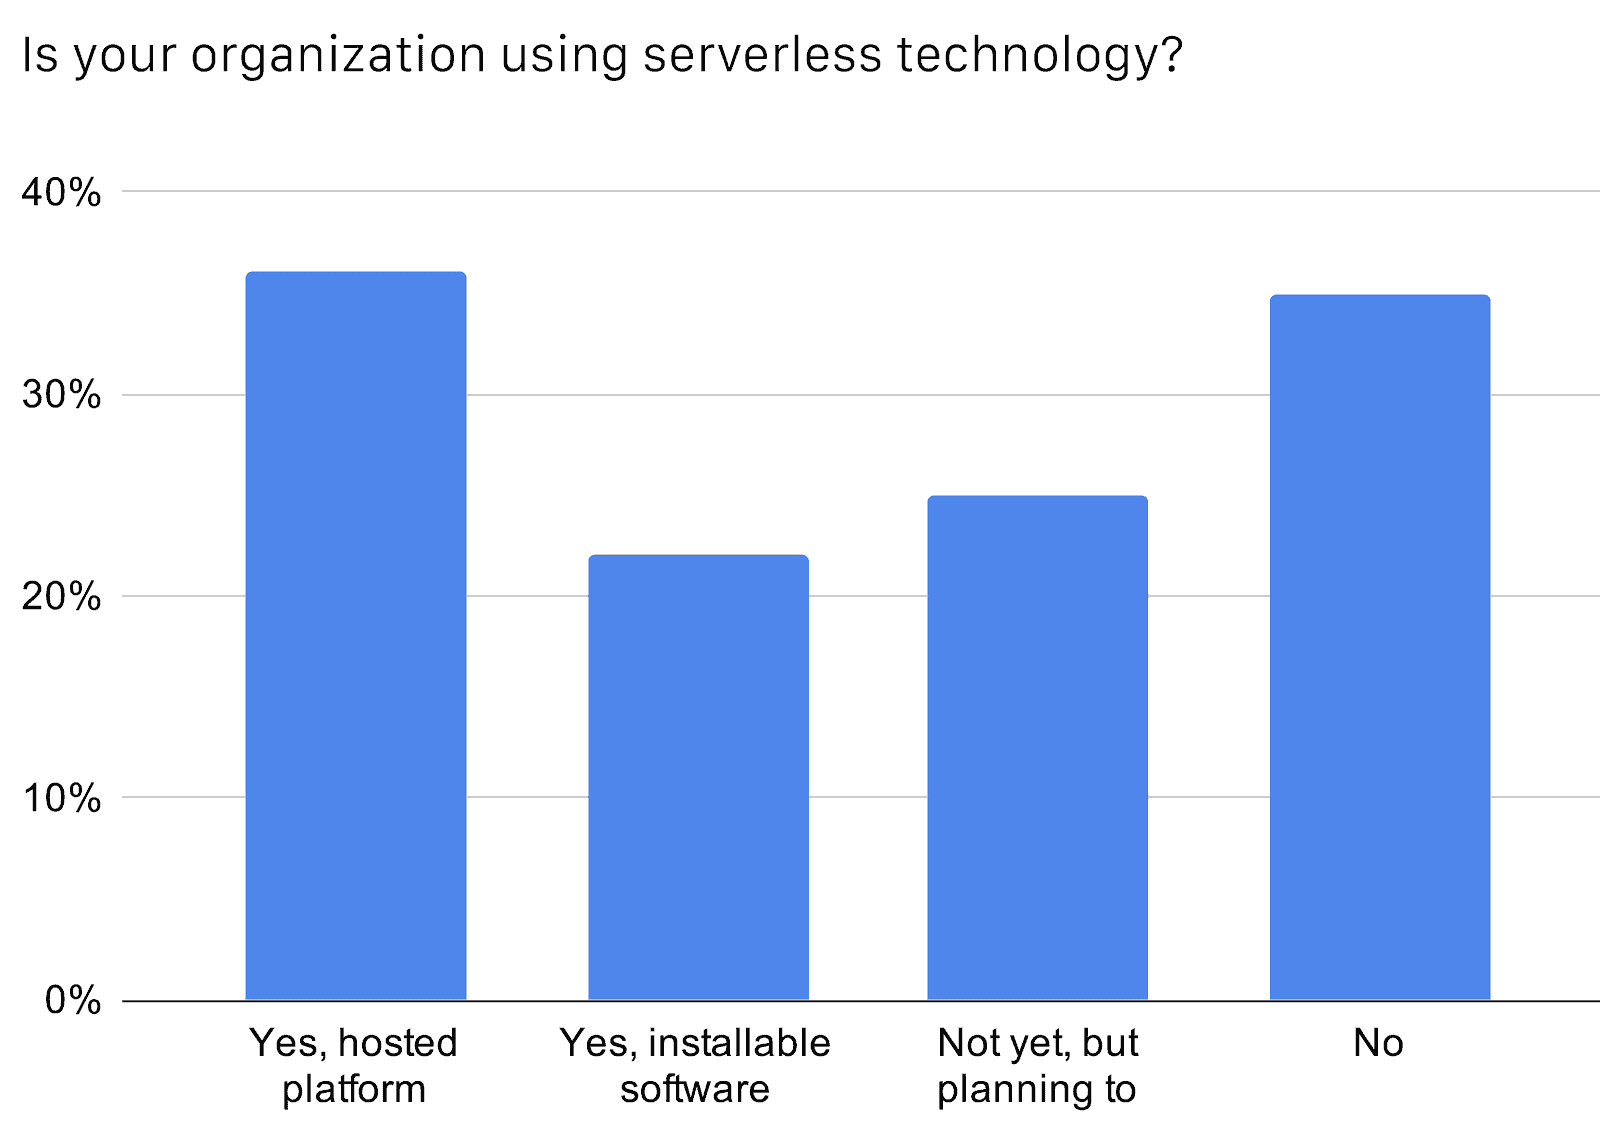 Bar chart shows percentage of organizations using serverless technology